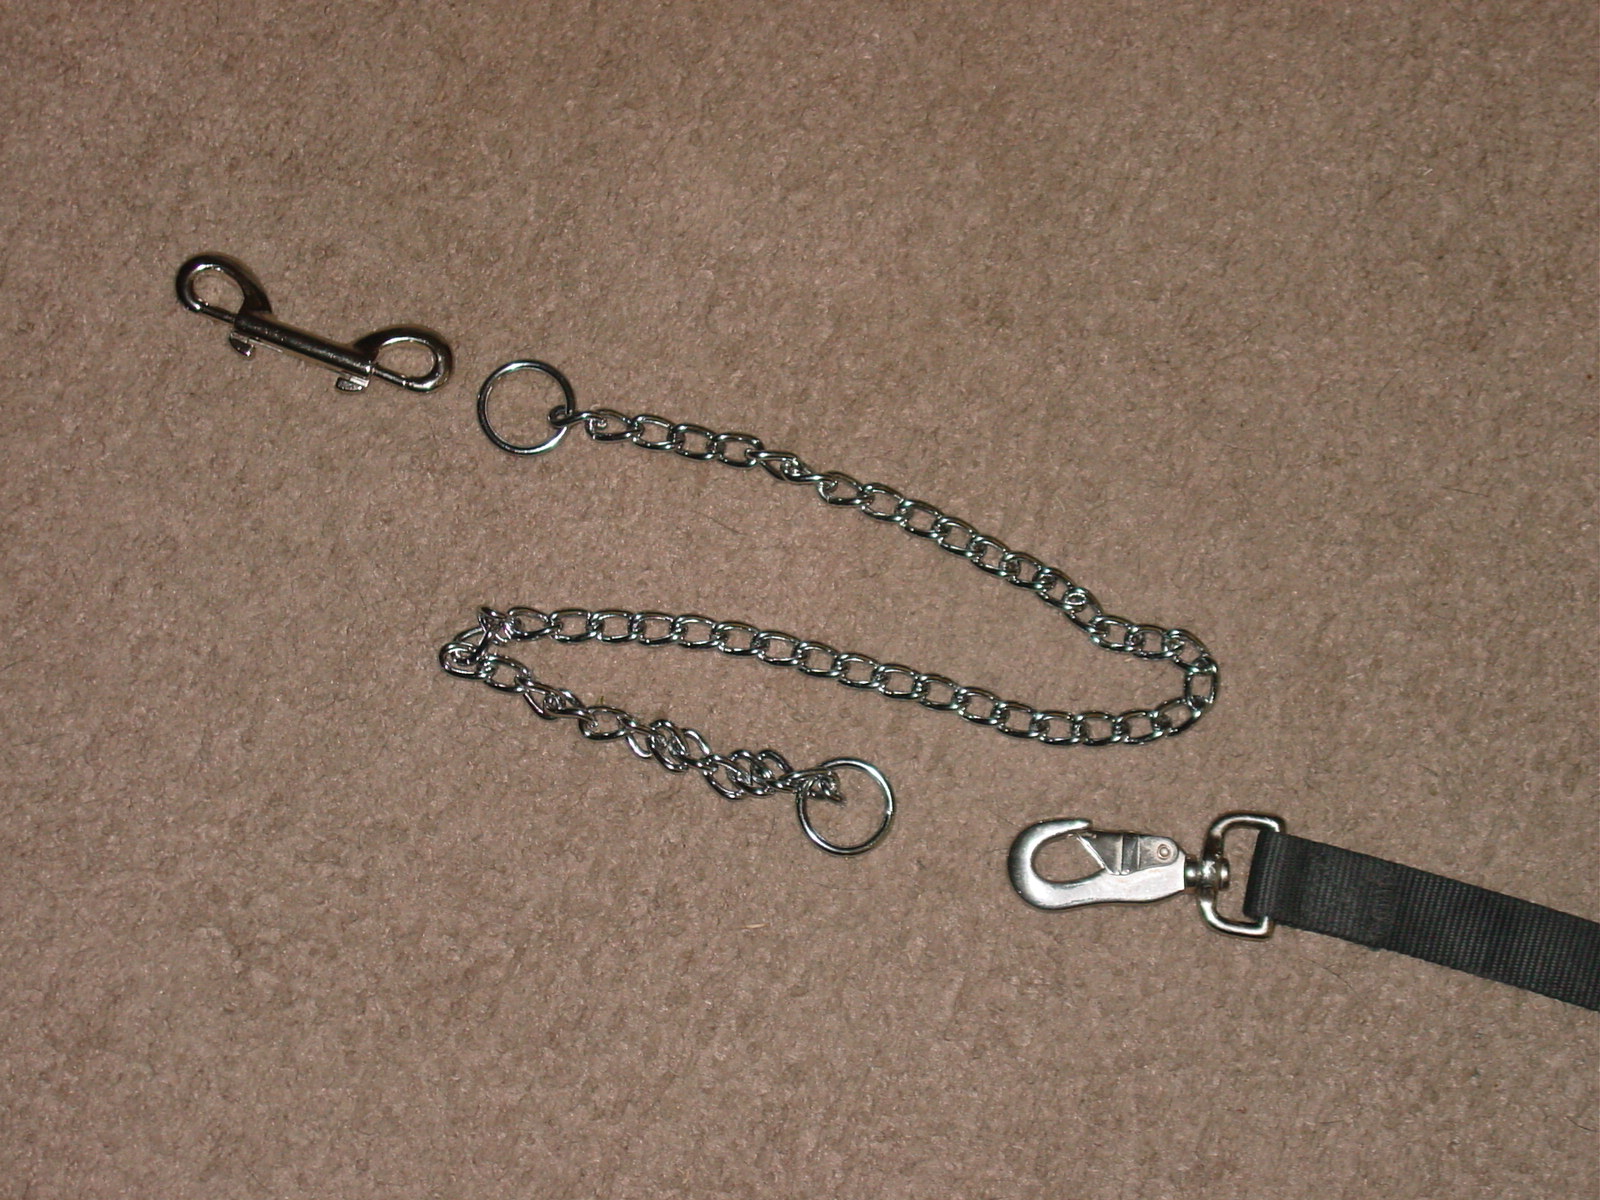 44-8453. Snap, choke chain, and leash